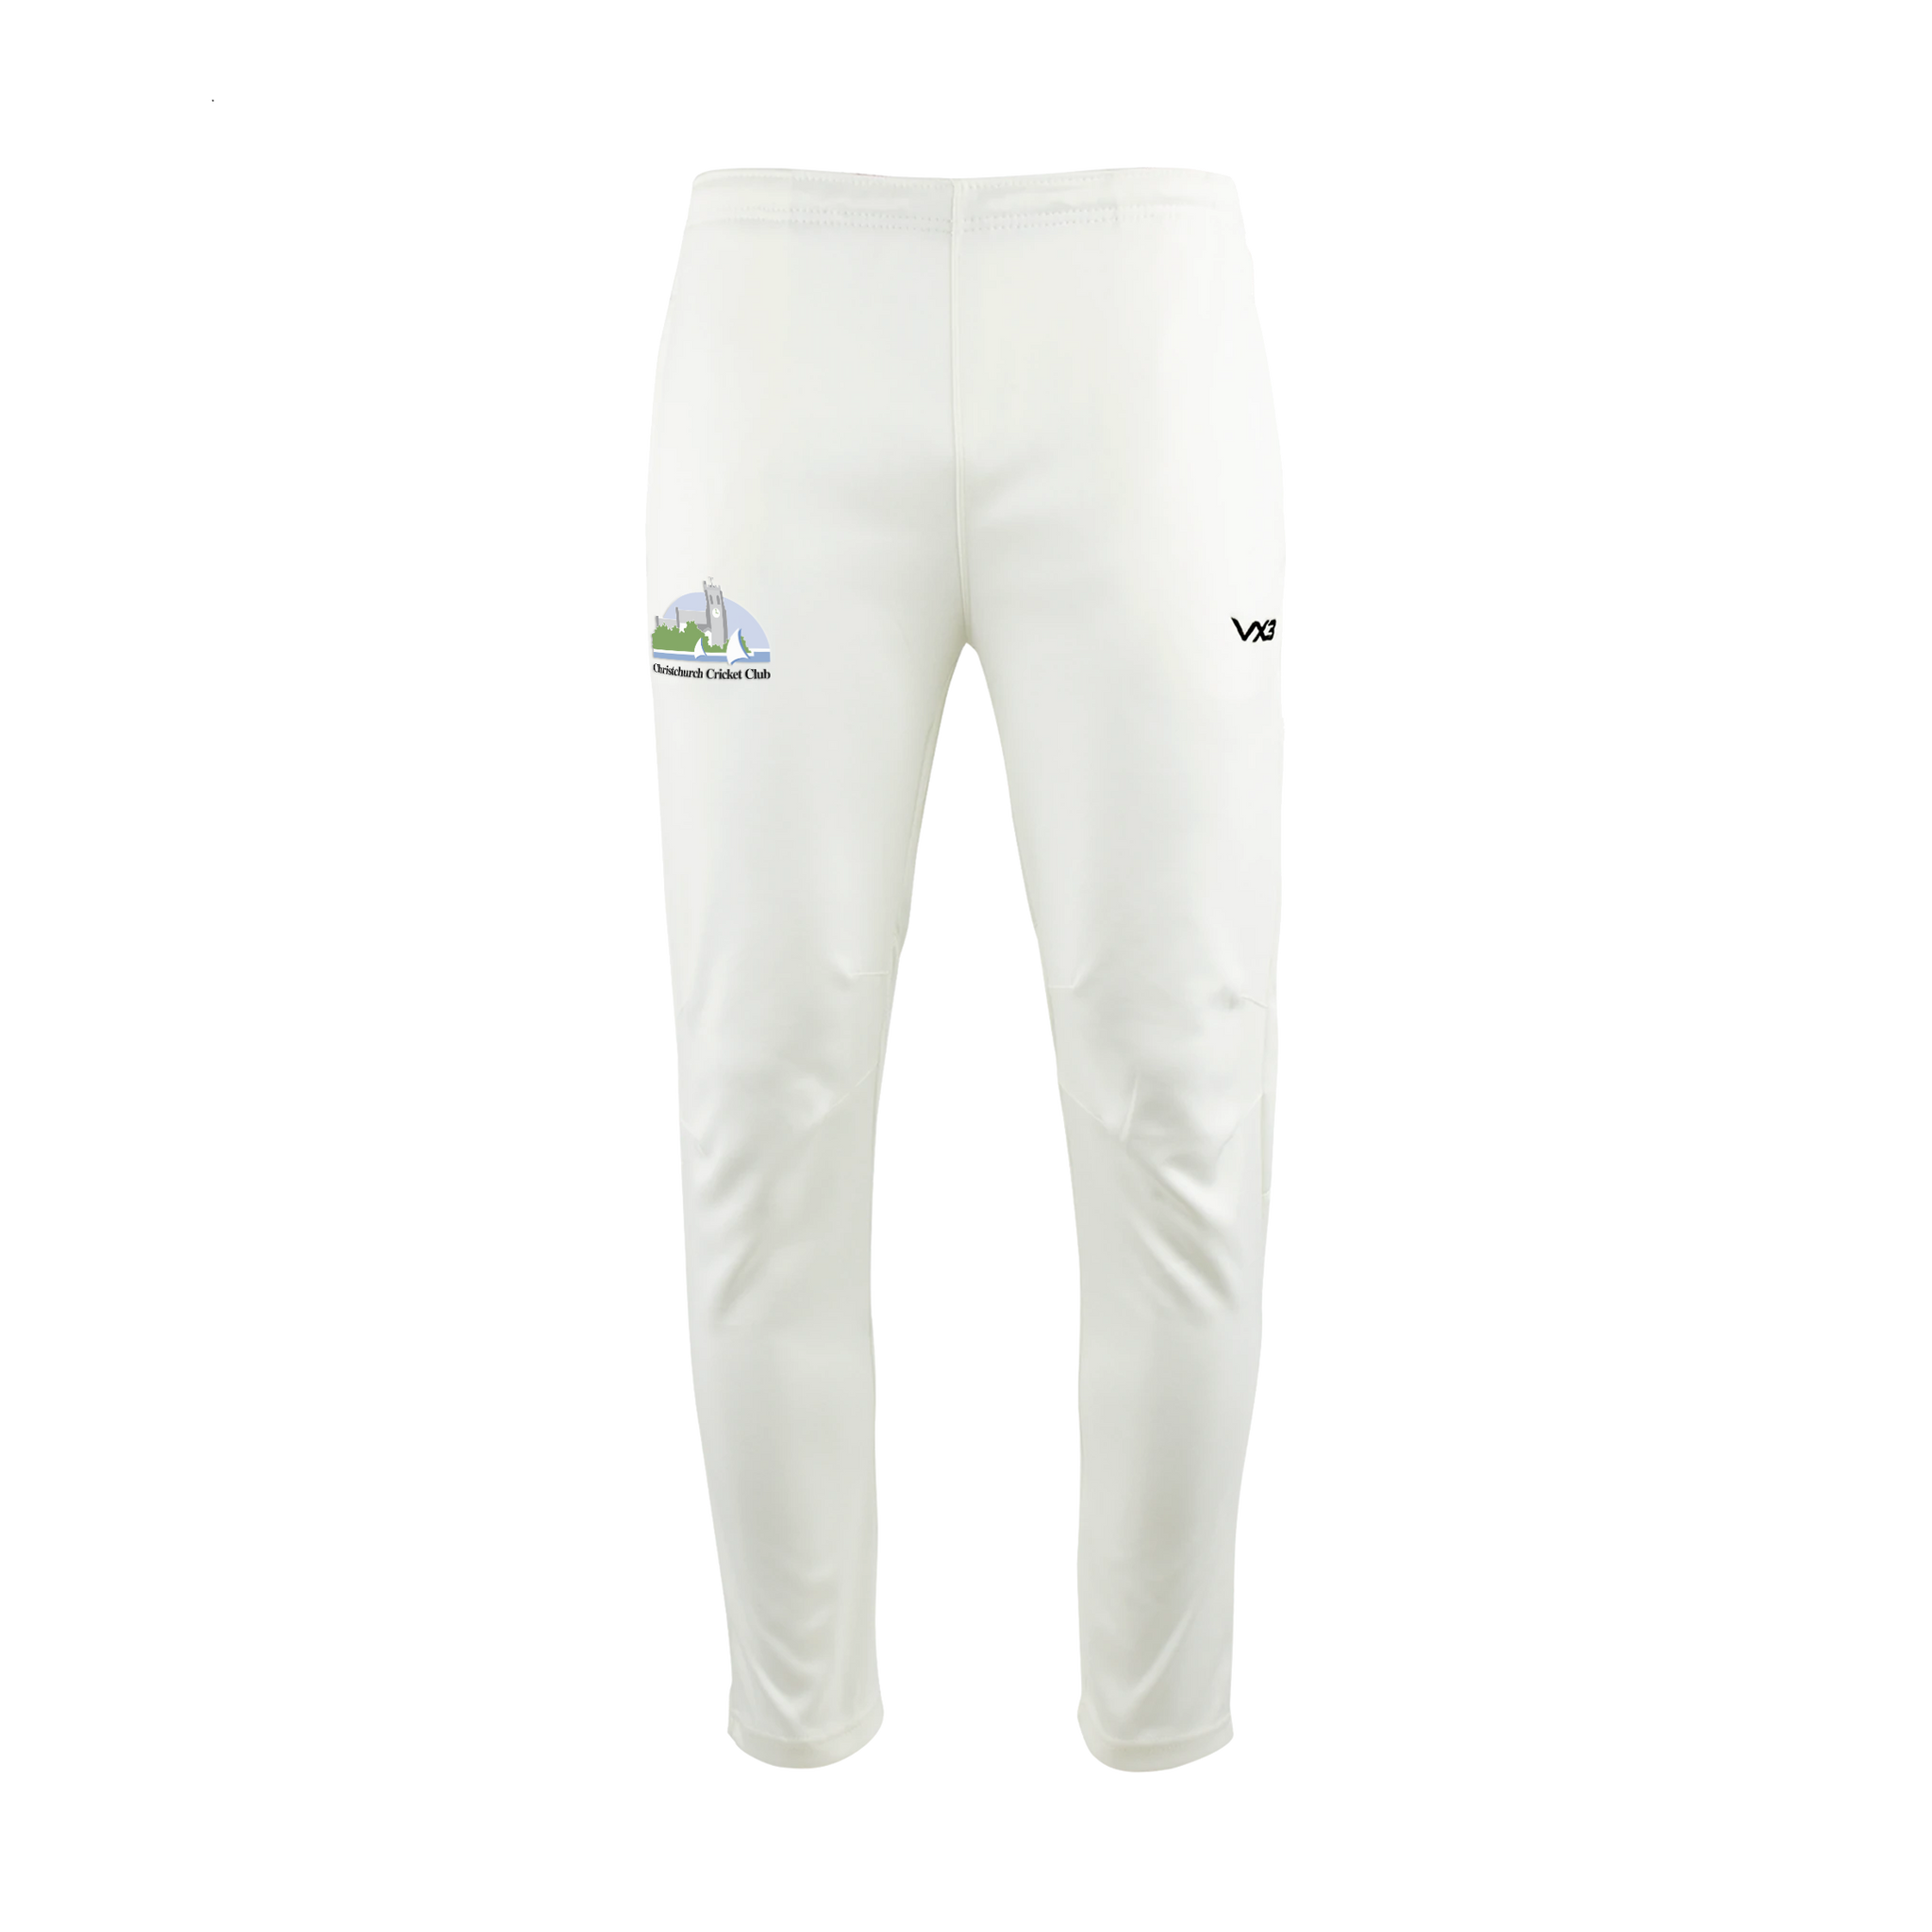 Buy Cricket Pants online in AU | Western Sports Centre